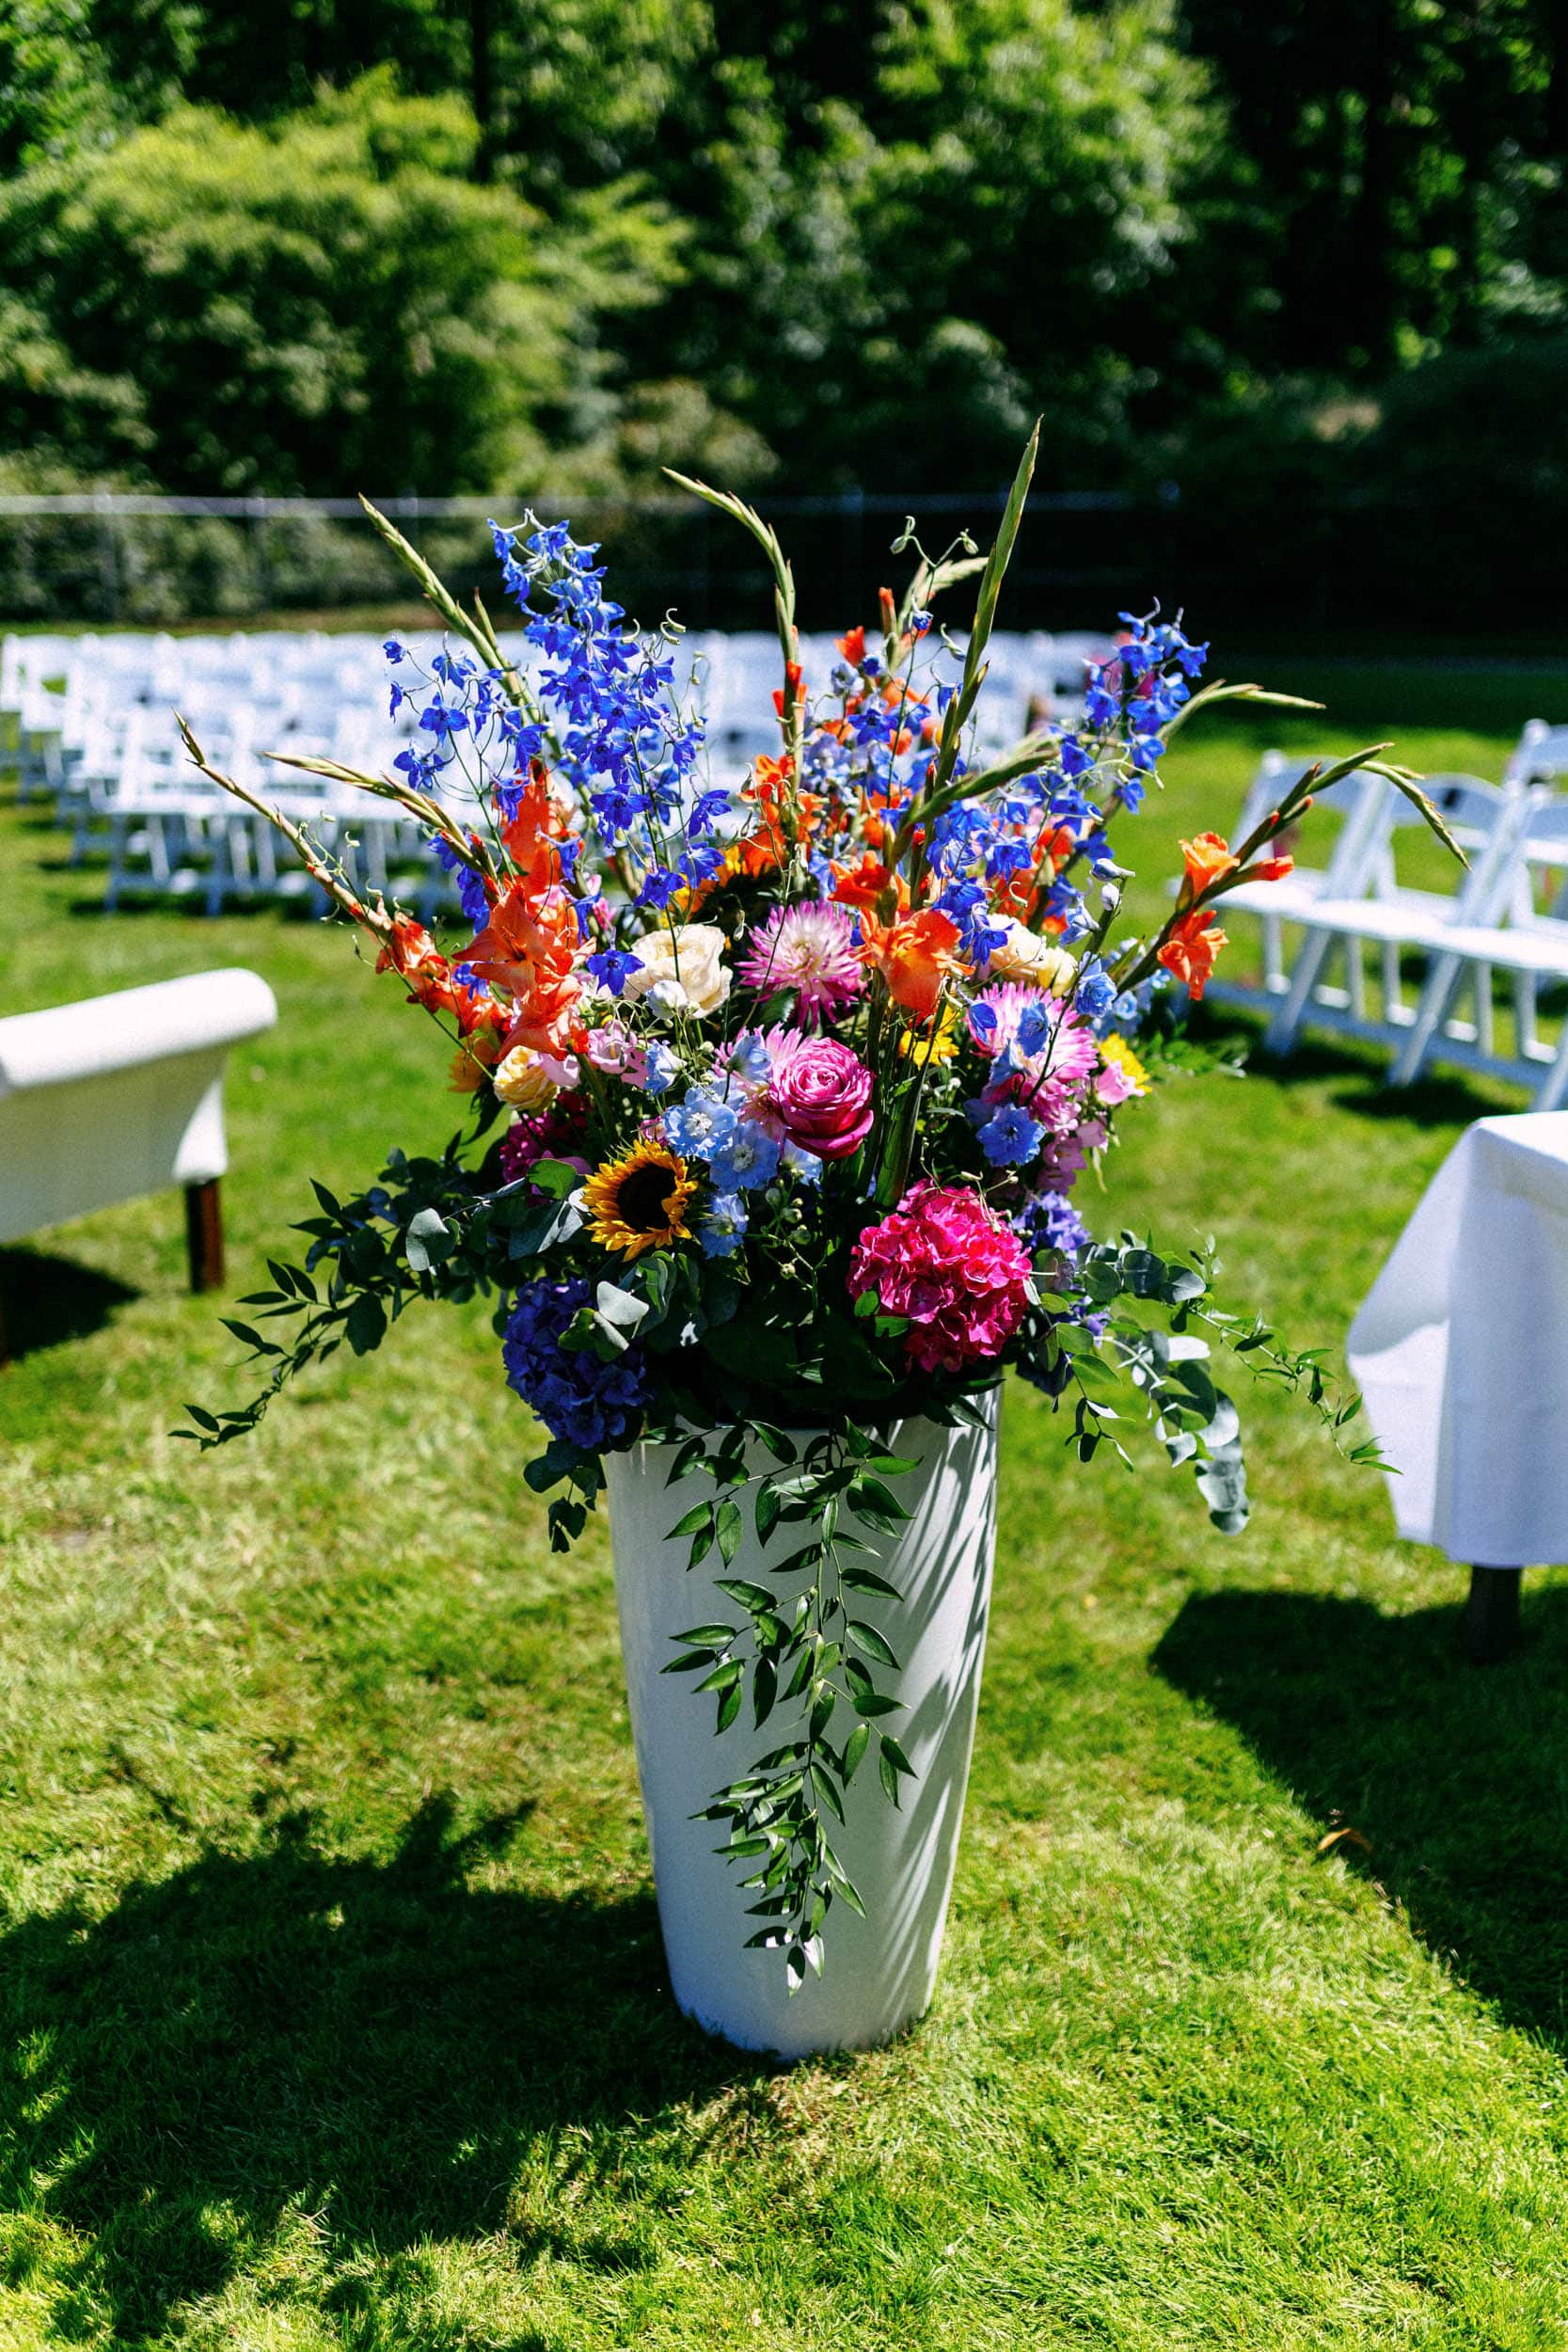 A vibrant bouquet of flowers adorns a lush lawn.